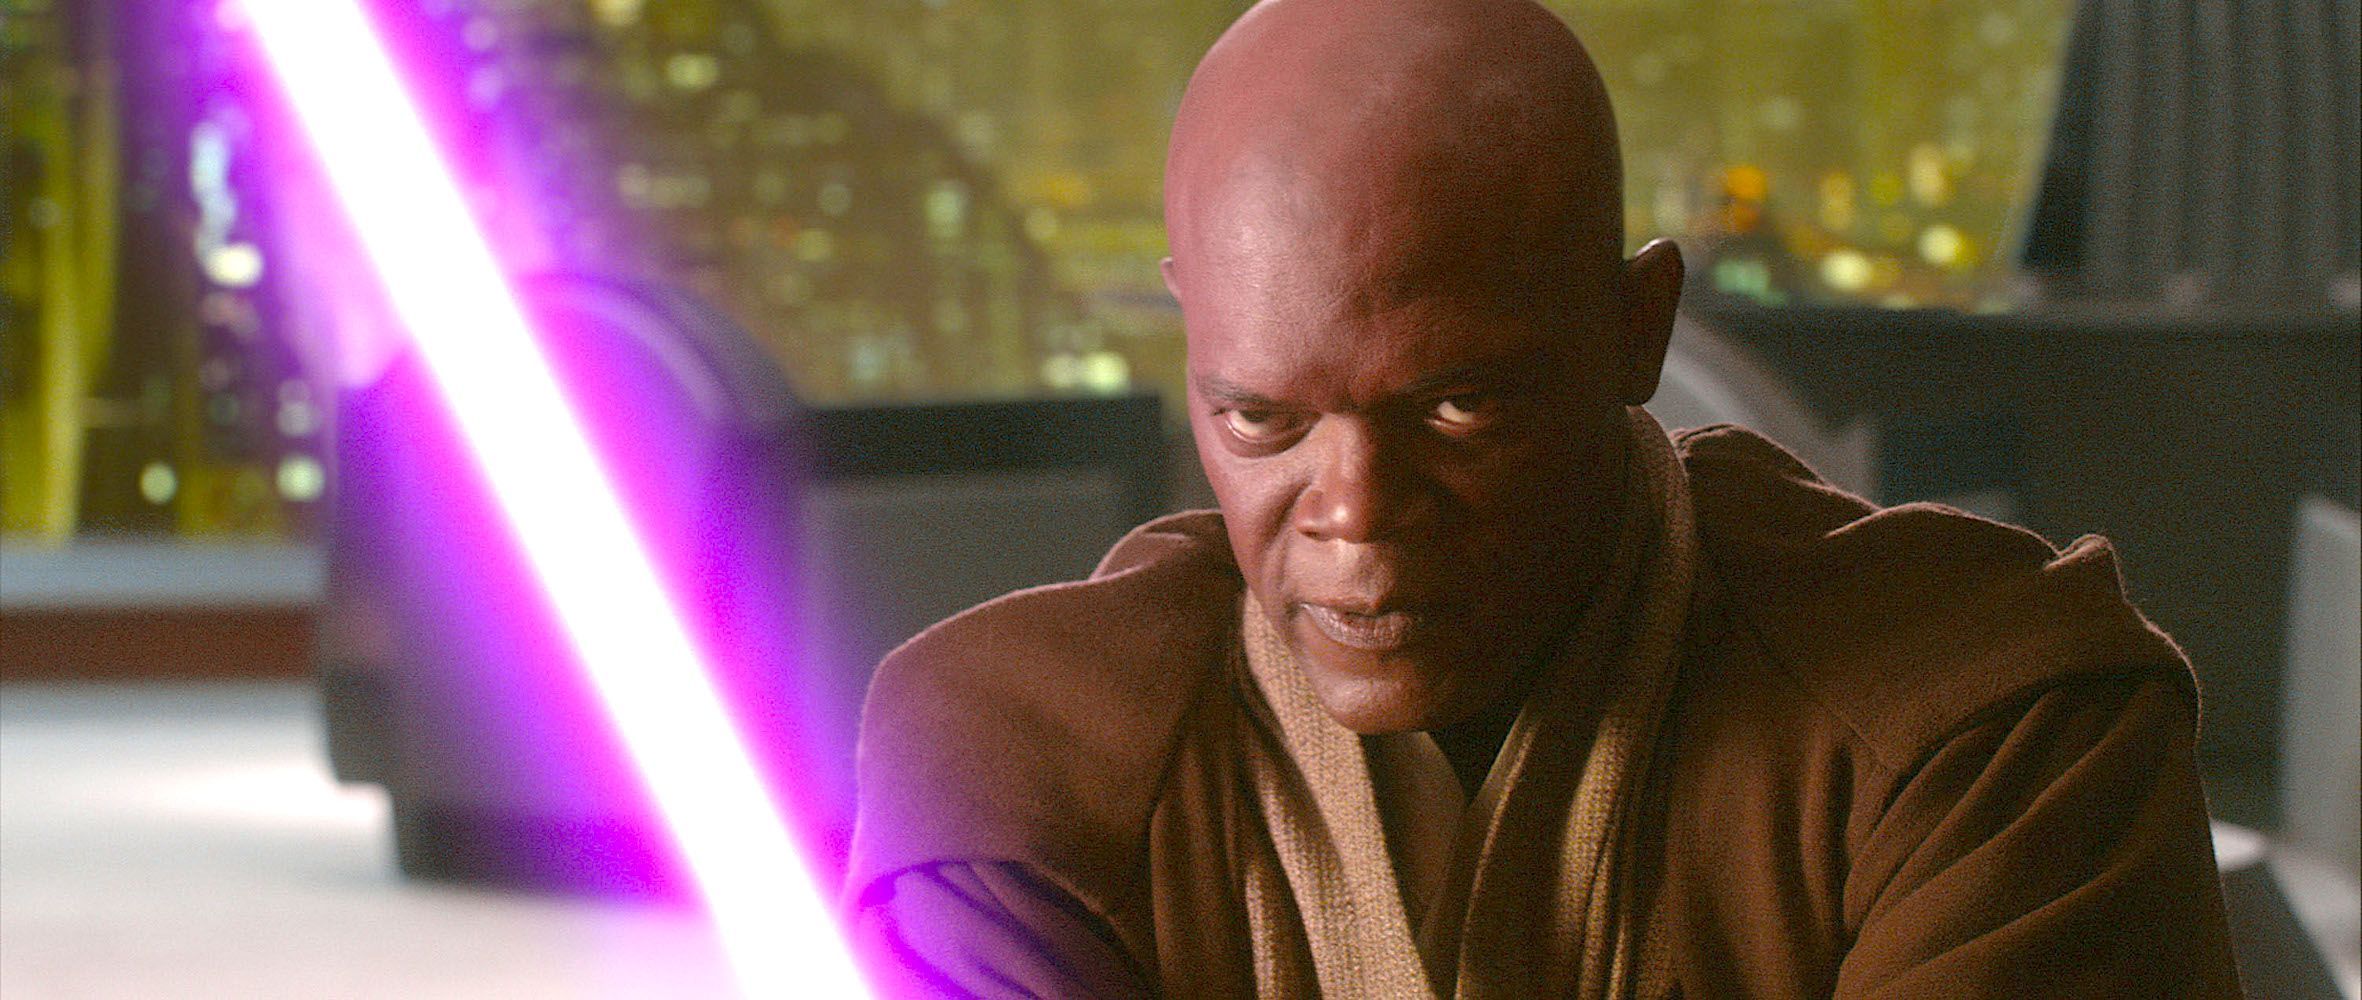 Star Wars the Rise of Skywalker Mace Windu Alive Theory Samuel L Jackson Return in Star Wars 9?